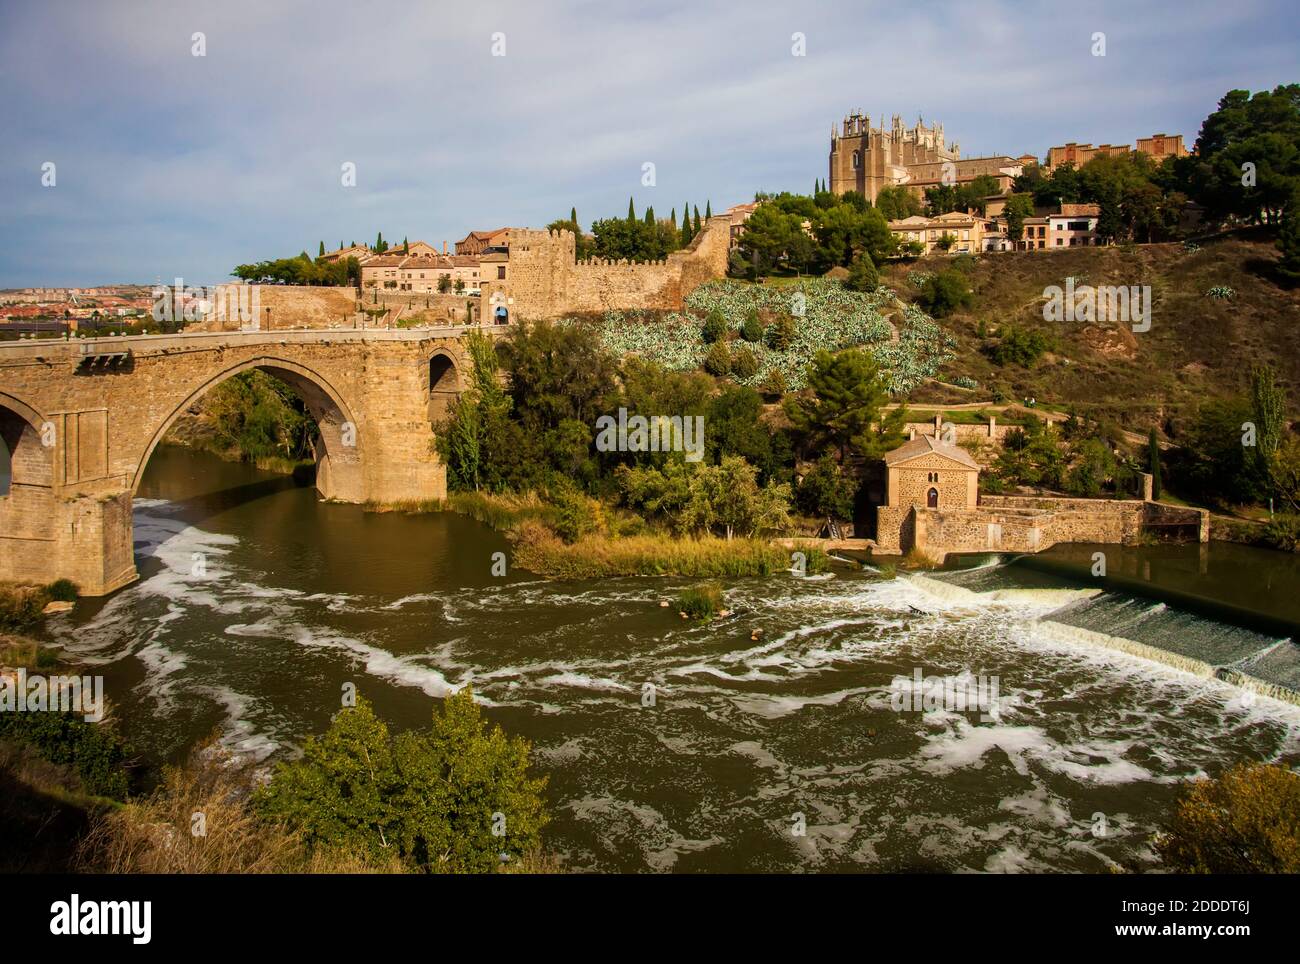 Puente de Alcántara Roman Bridge over River Tagus, Toledo, Spain Stock Photo